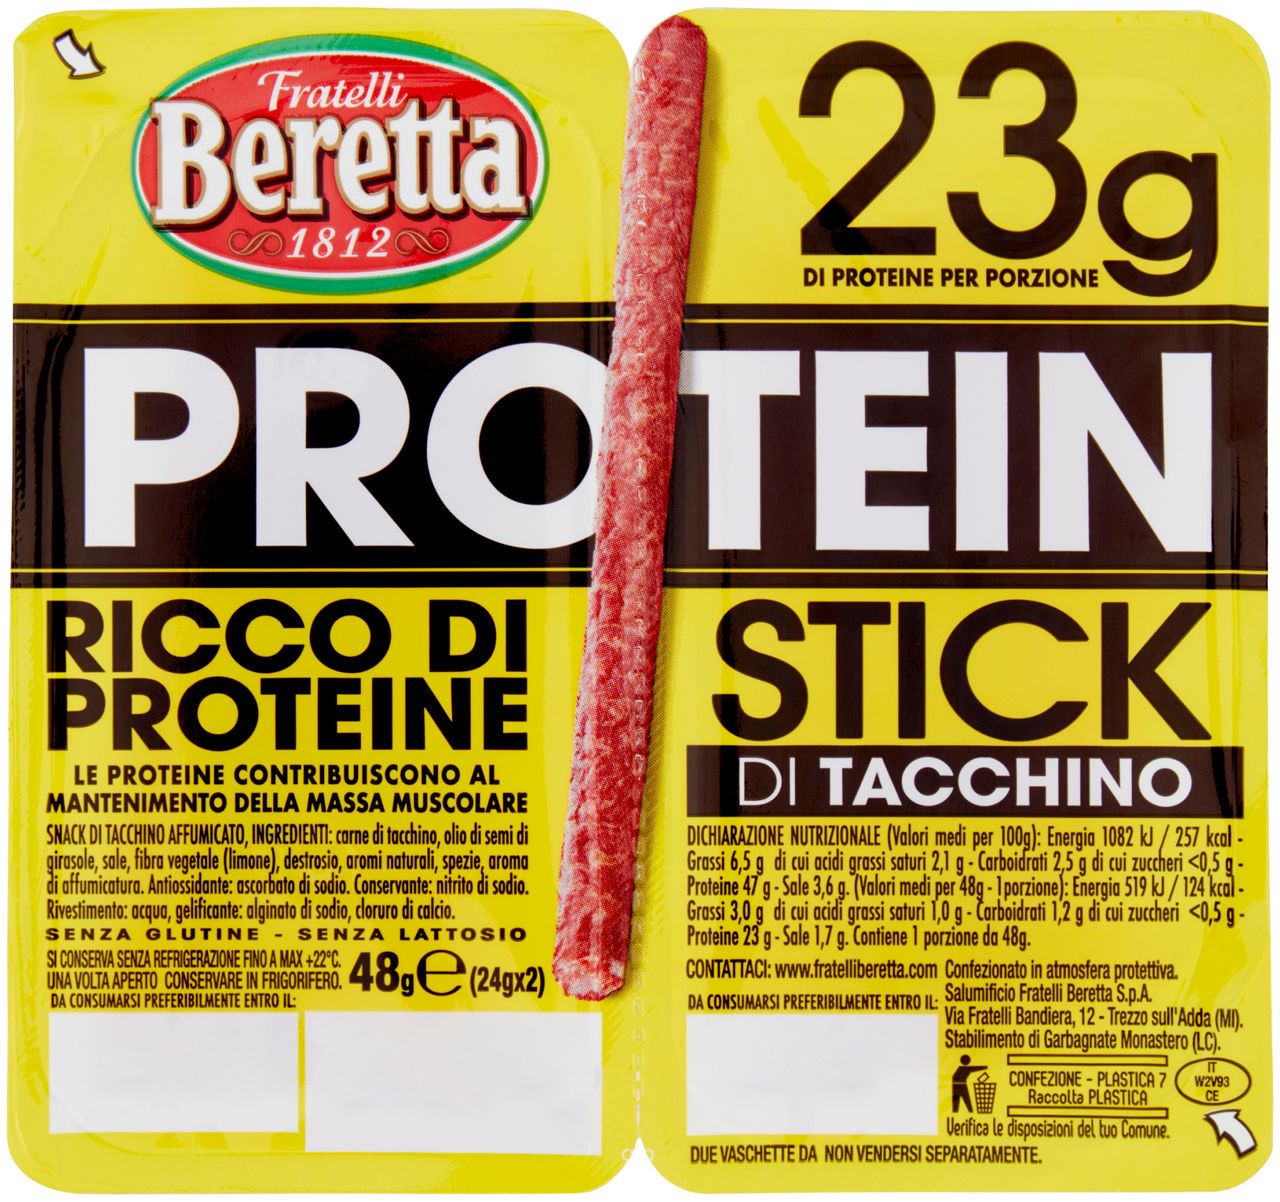 Protein stick di tacchino beretta g24 x2 g 48